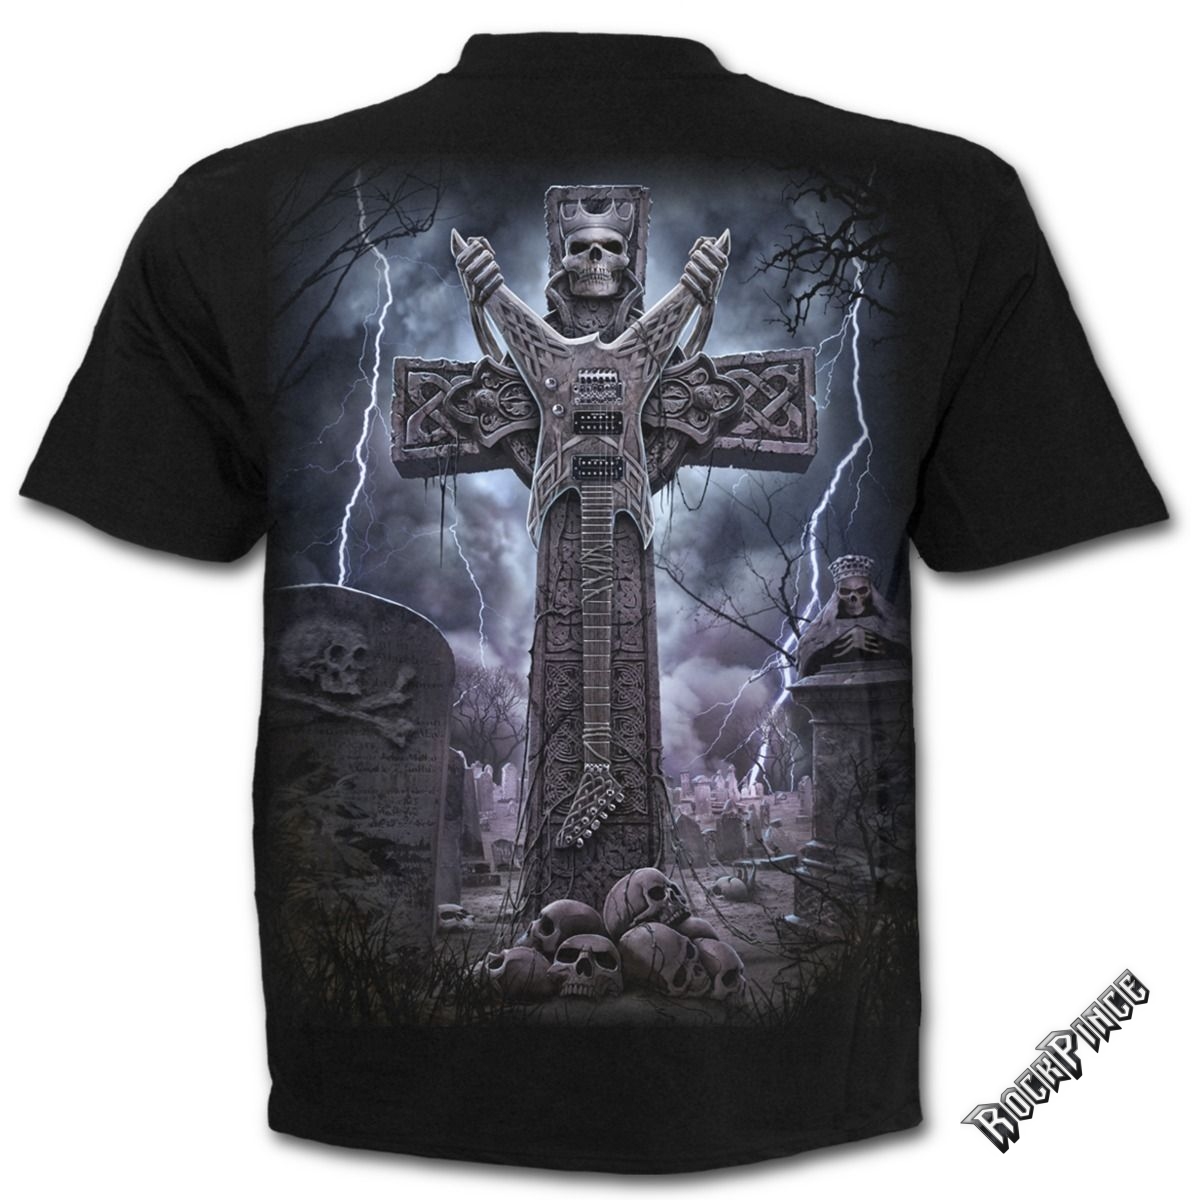 ROCK ETERNAL - T-Shirt Black - T136M101 - UNISEX PÓLÓ